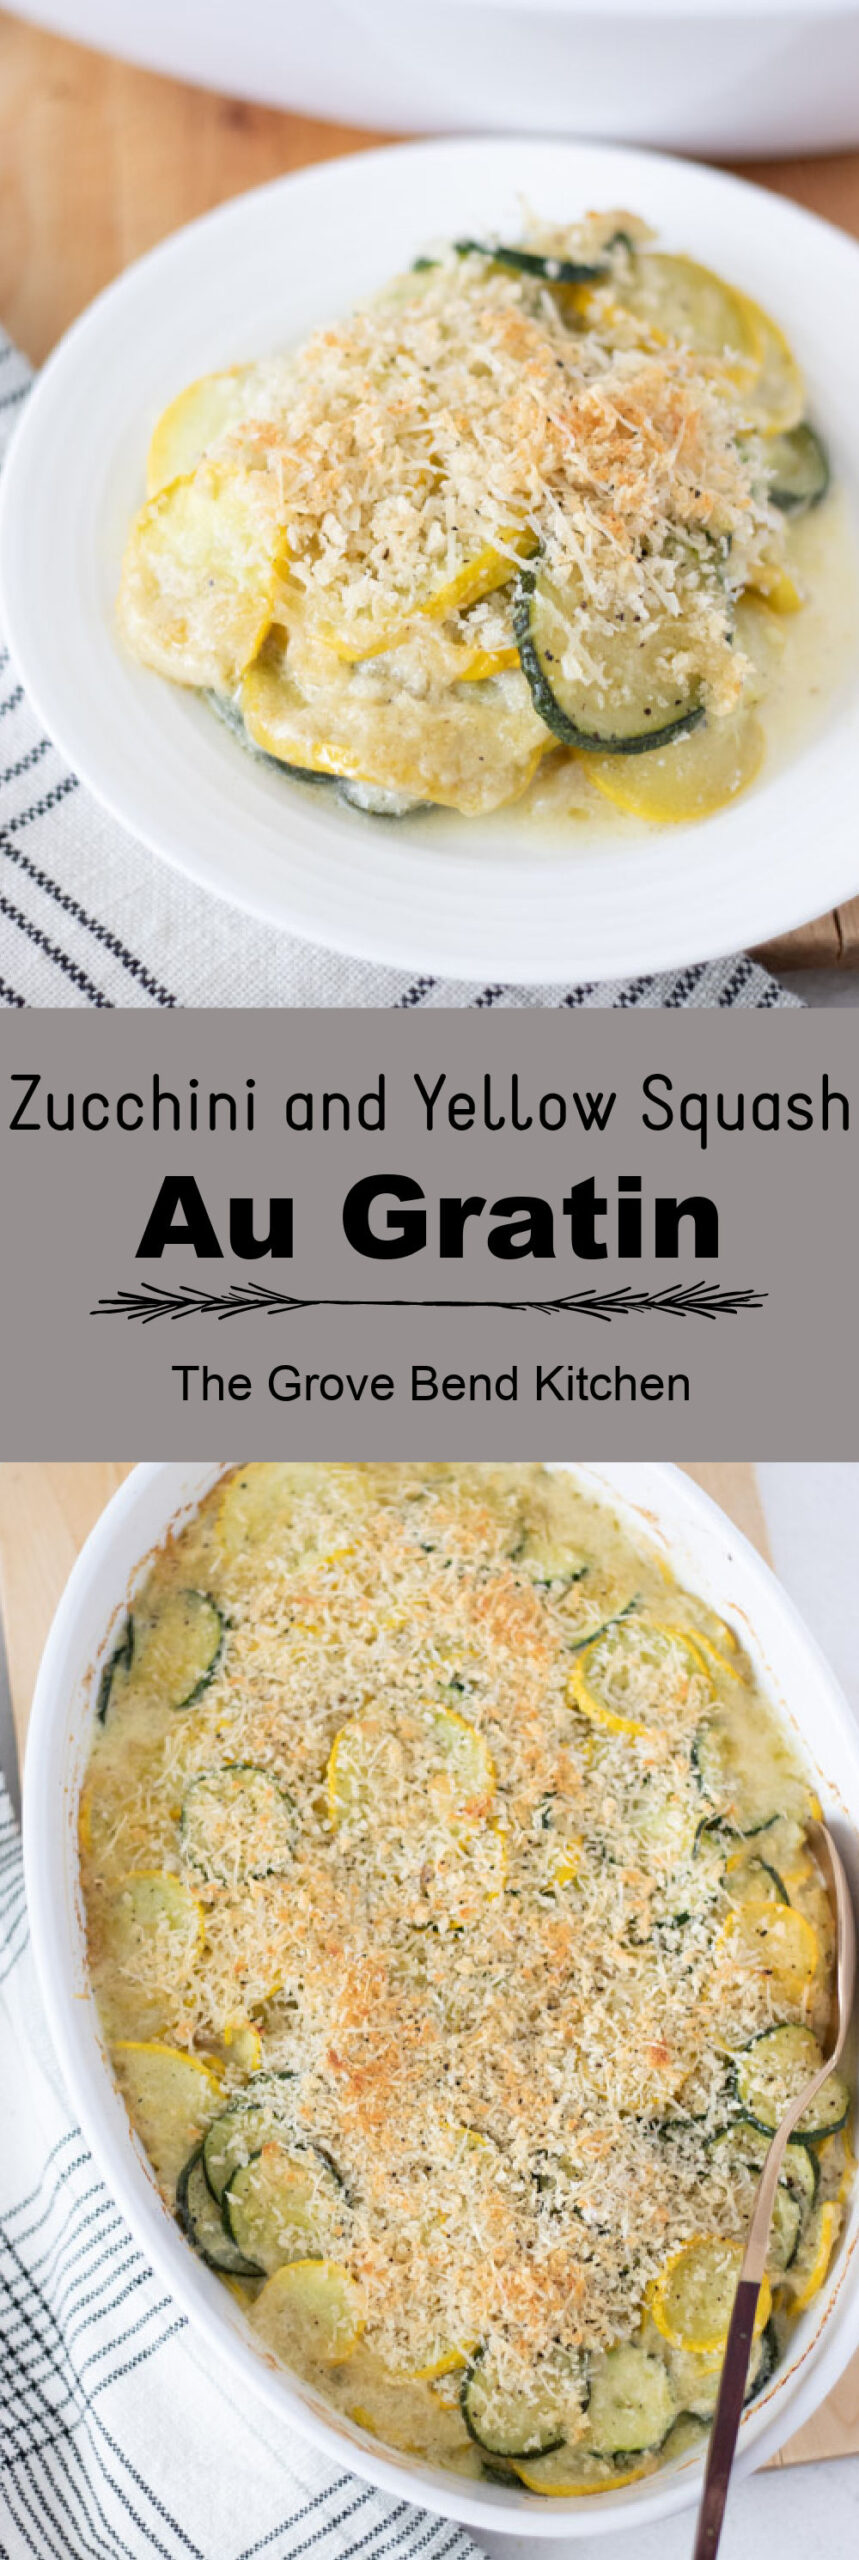 Zucchini and Yellow Squash Au Gratin - The Grove Bend Kitchen